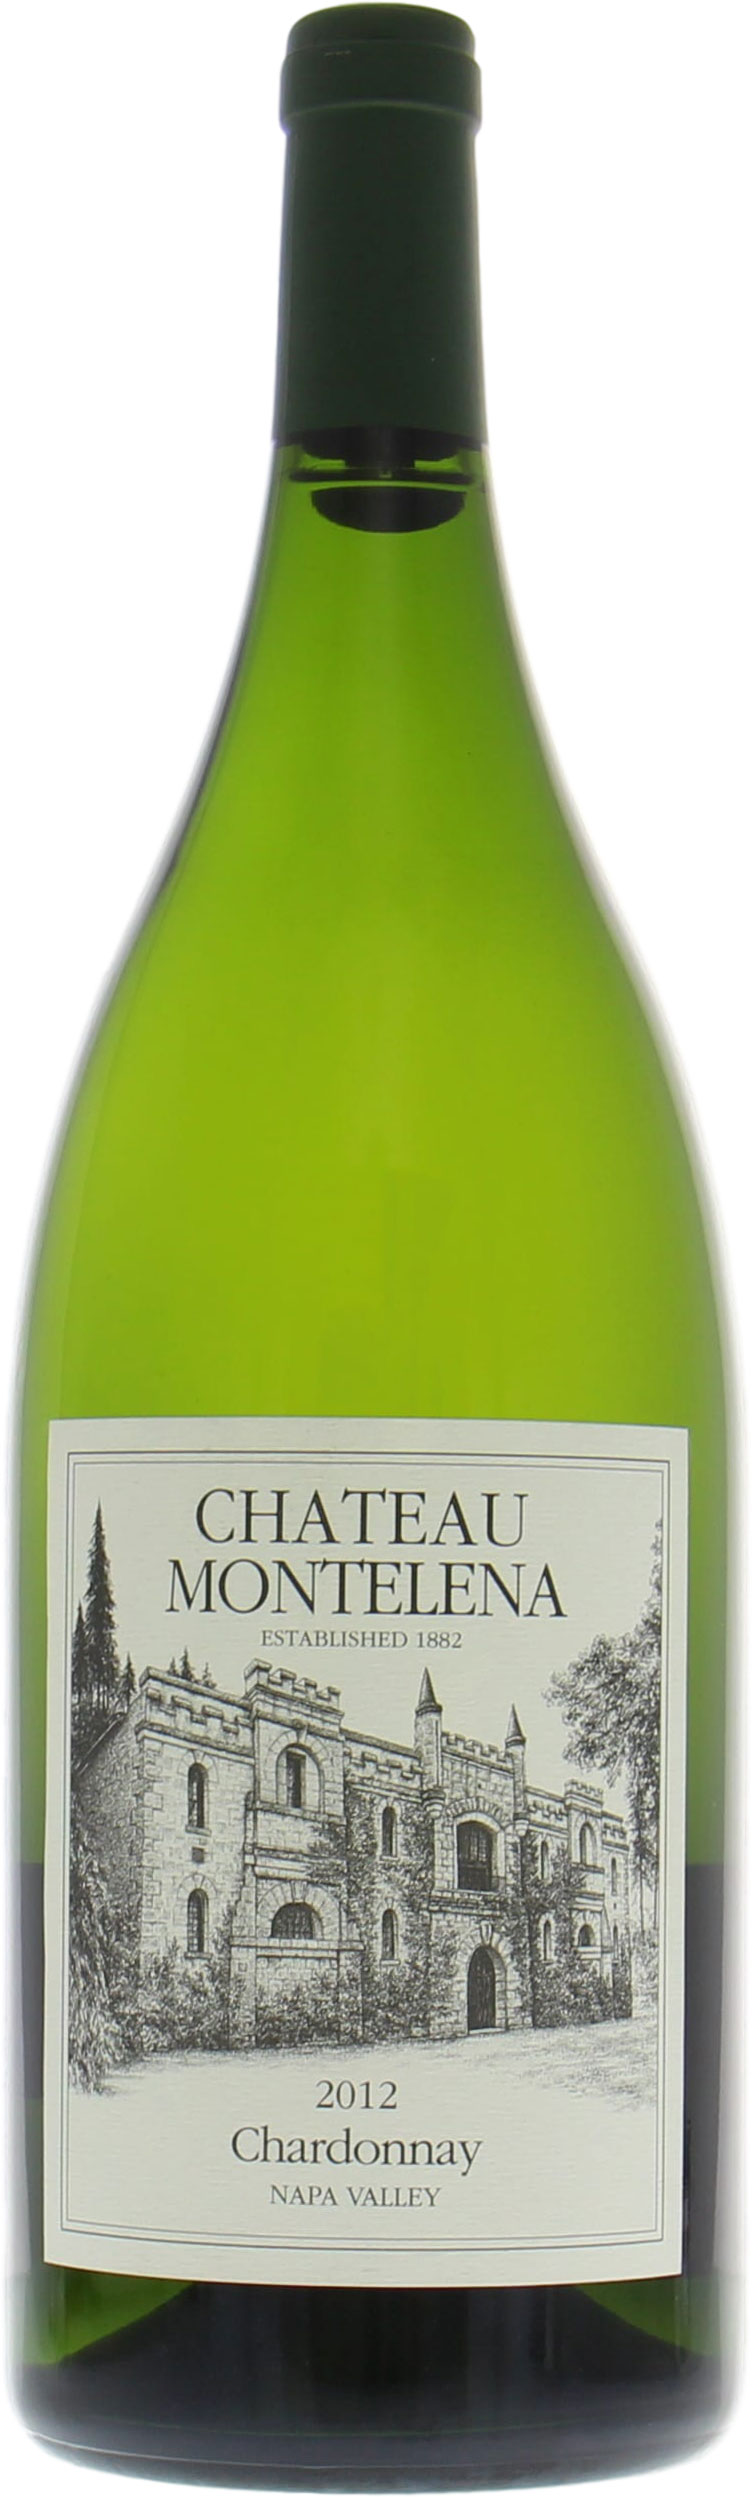 Chateau Montelena - The Chardonnay 2012 Perfect